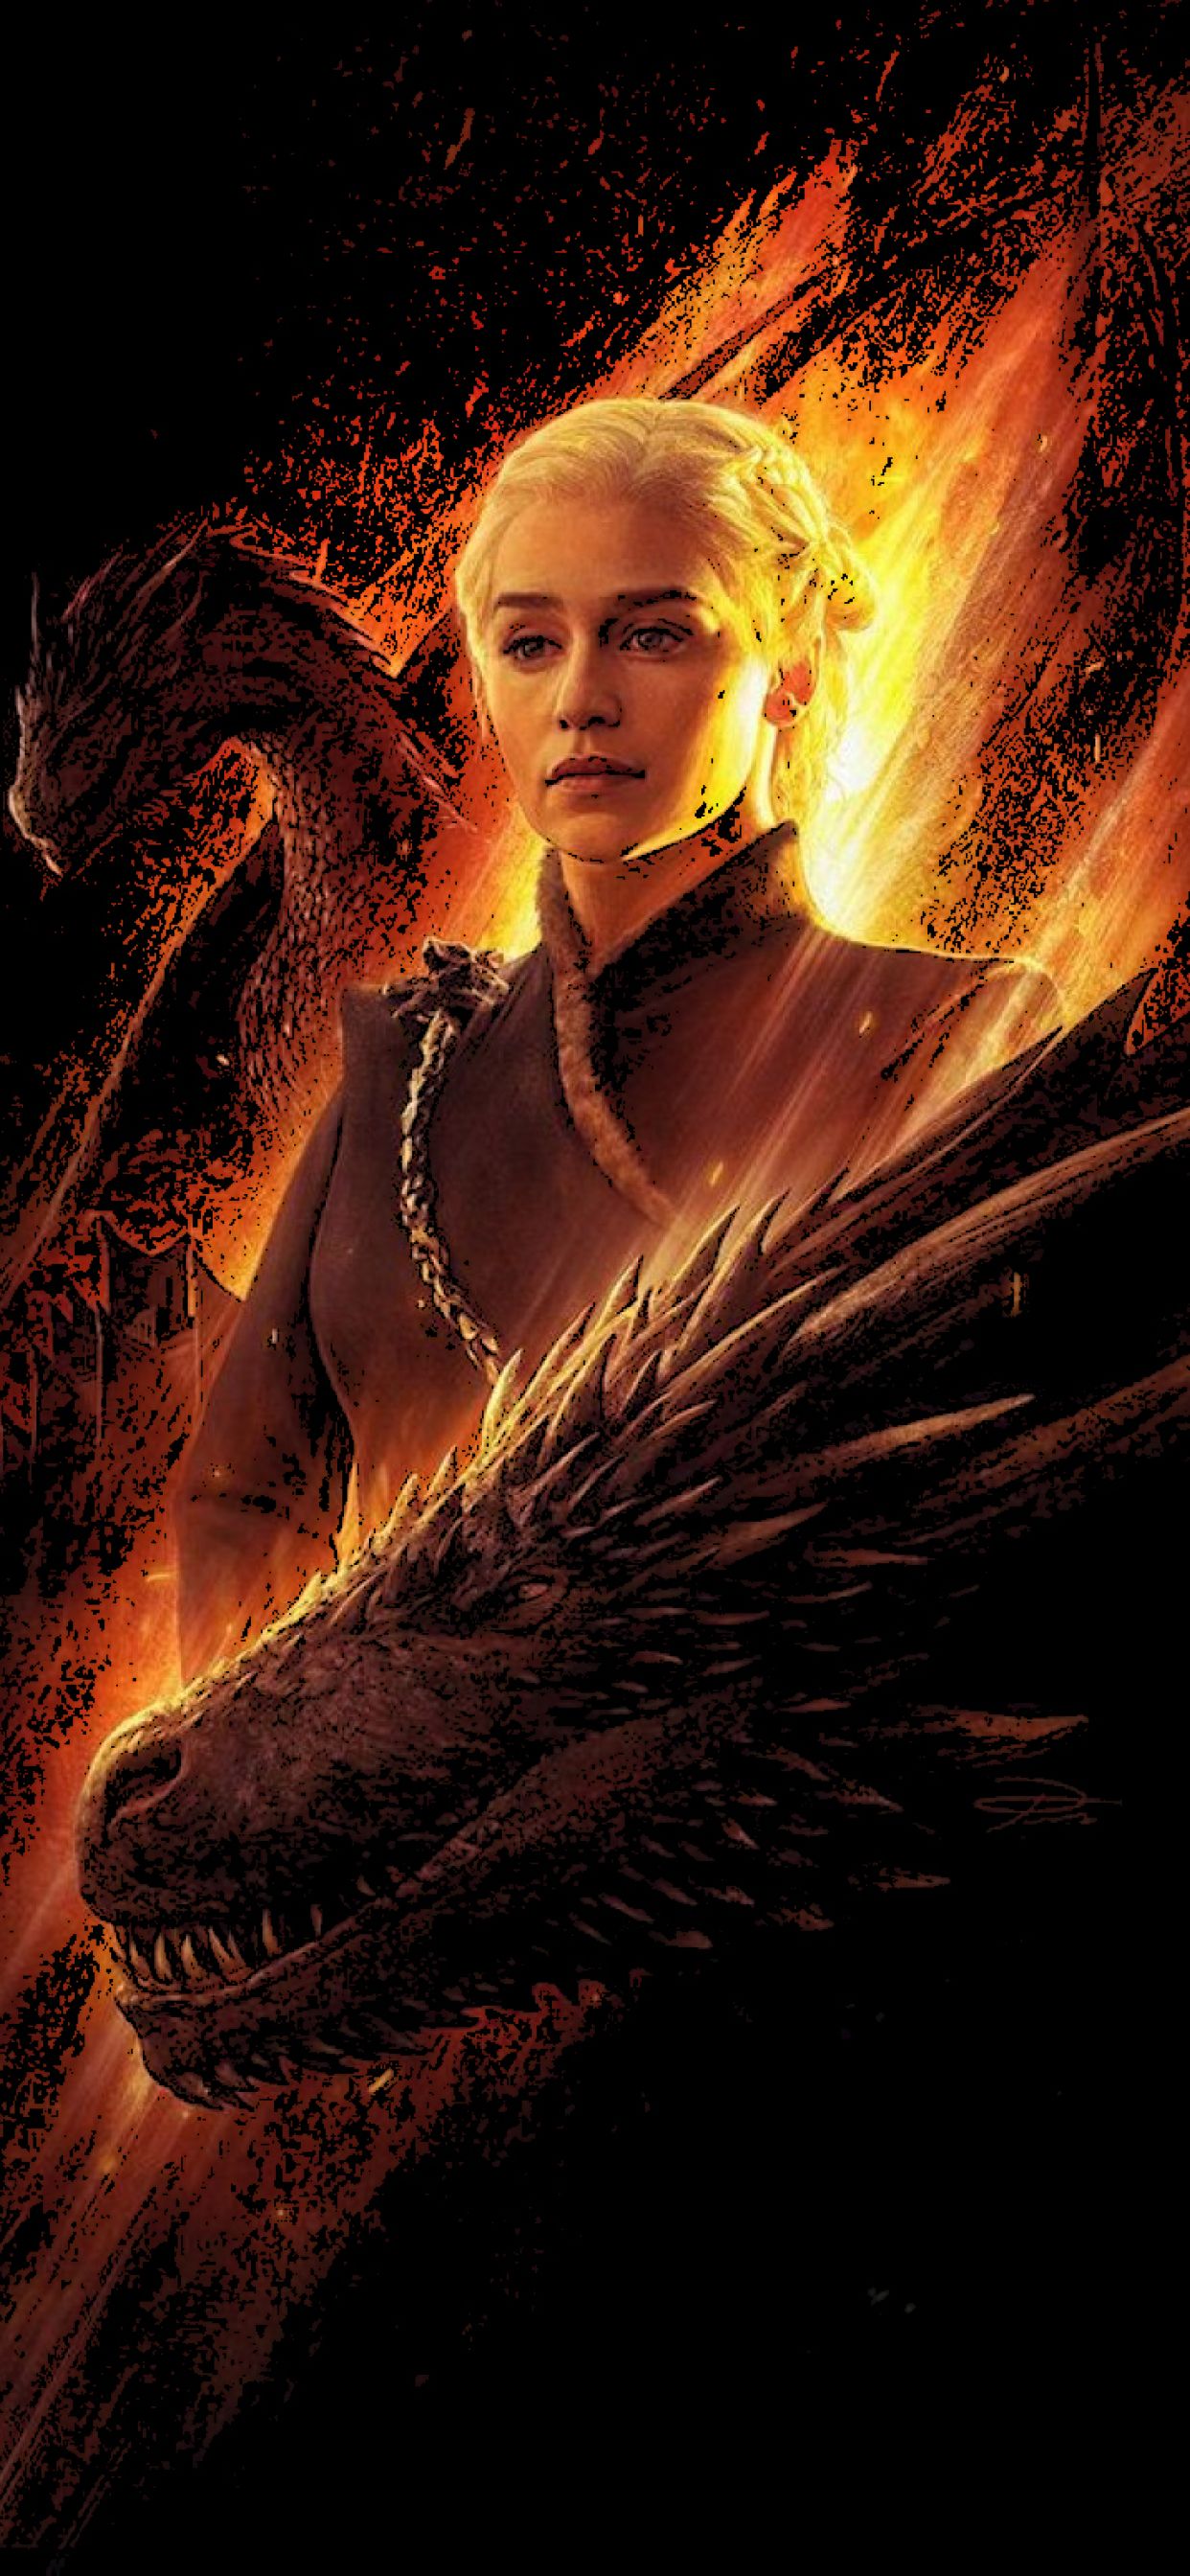 Daenerys and Dragons iPhone XS MAX Wallpaper, HD Artist